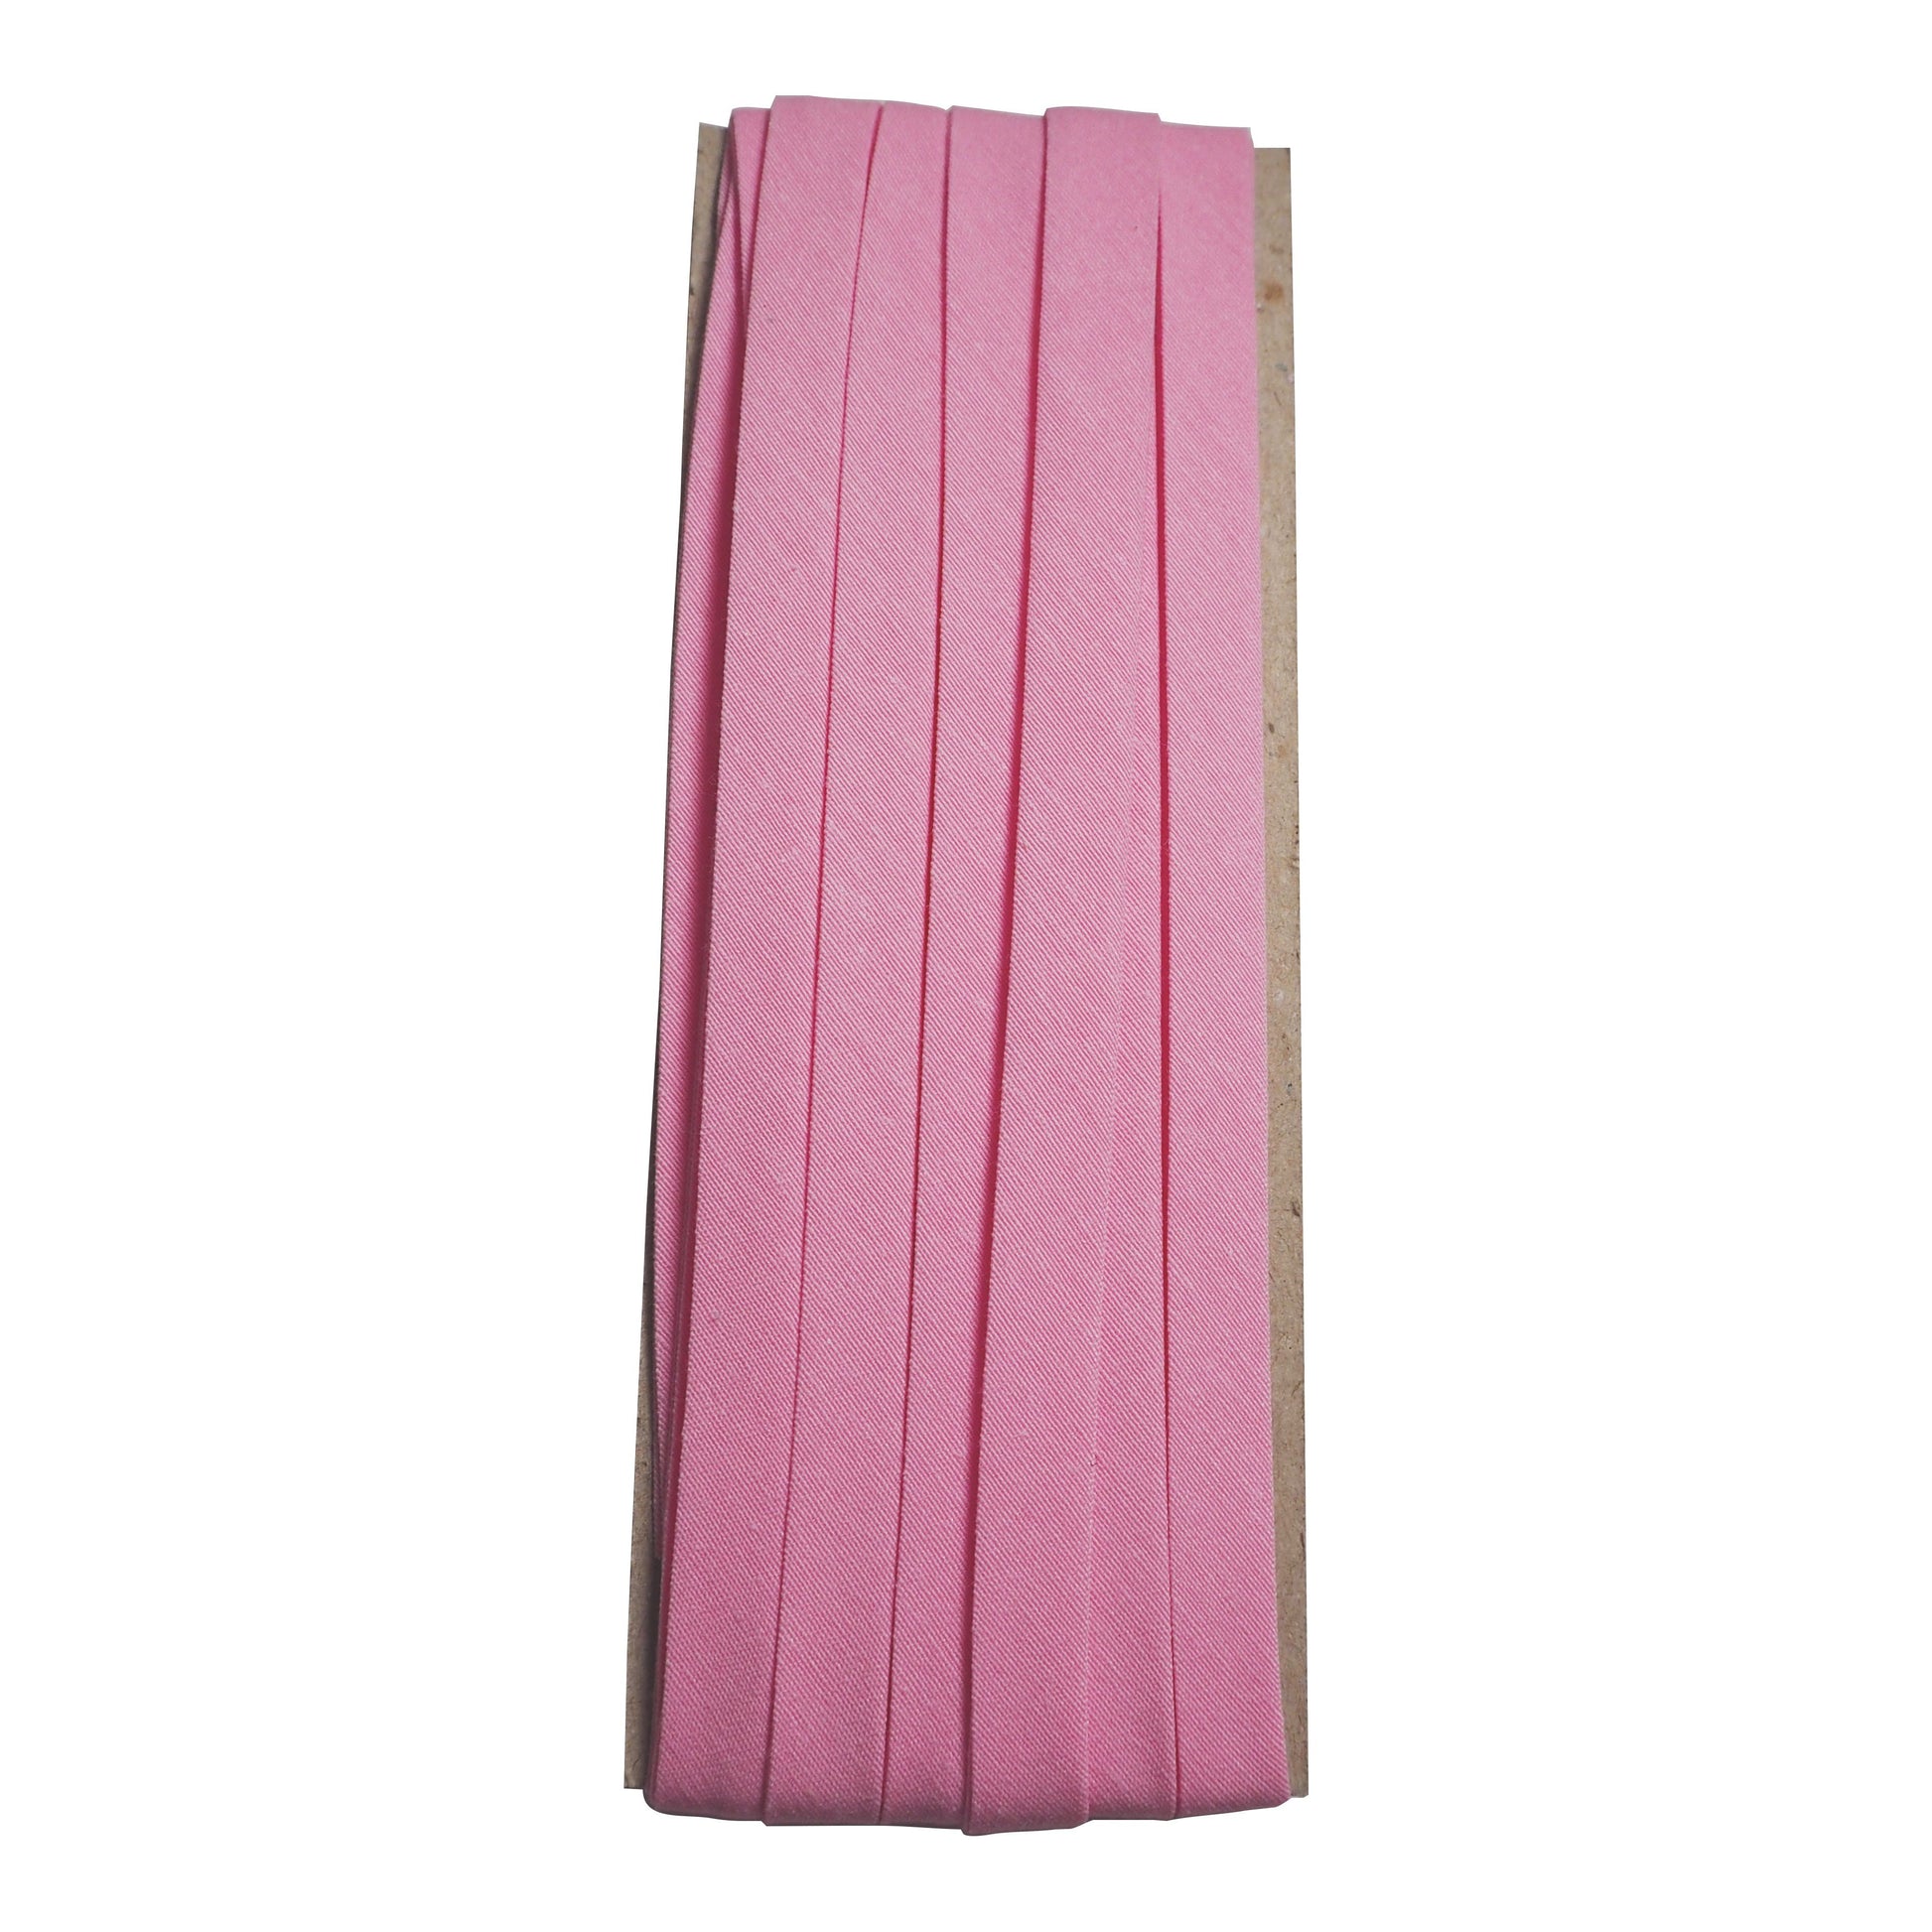 double fold cotton bias binding tape 10mm- 3/8inch (5yds) 5 yards / pink